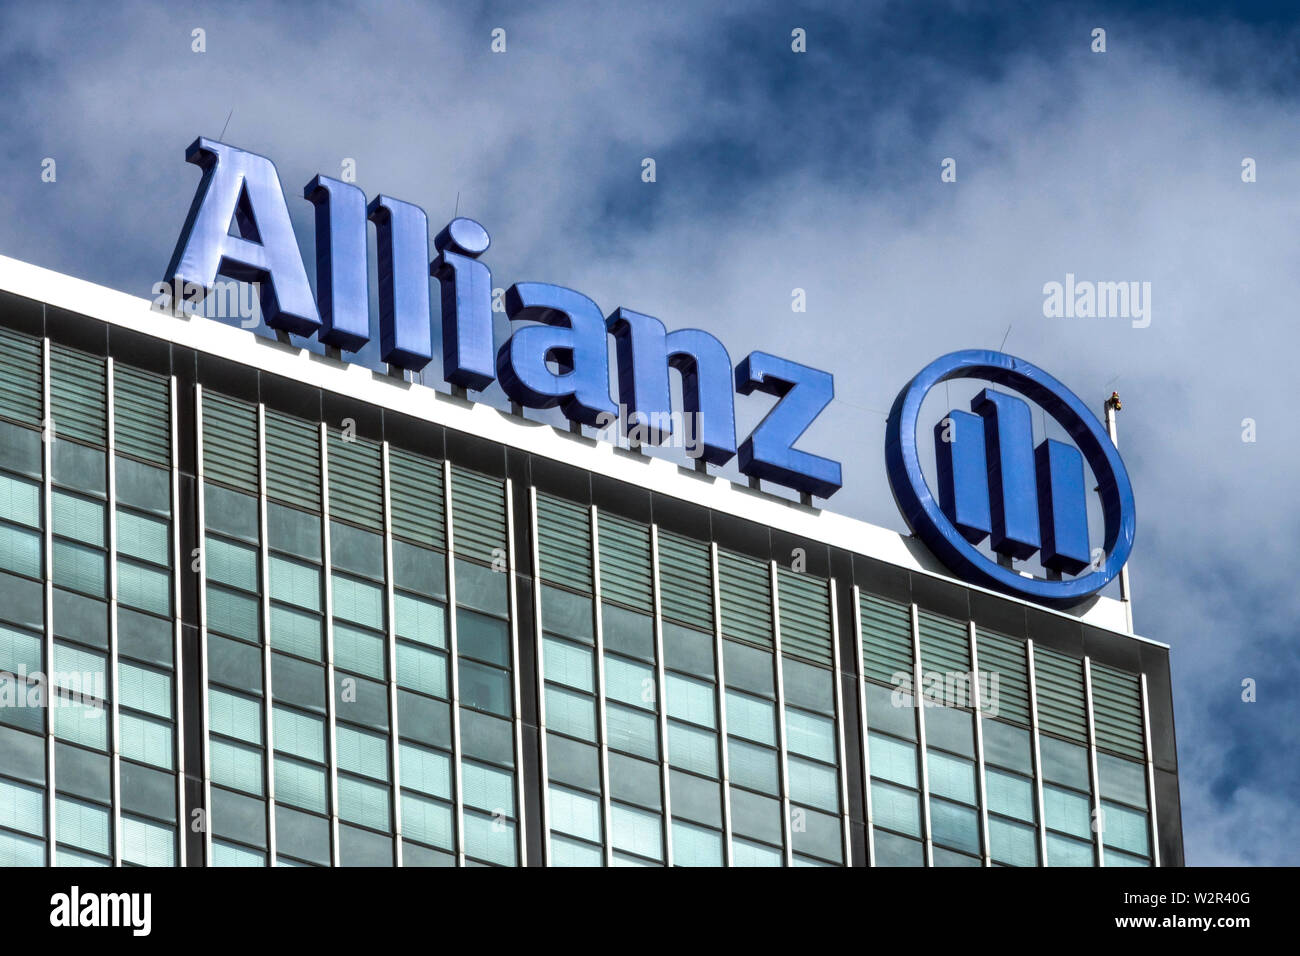 Allianz logo Immagini e Fotos Stock - Alamy